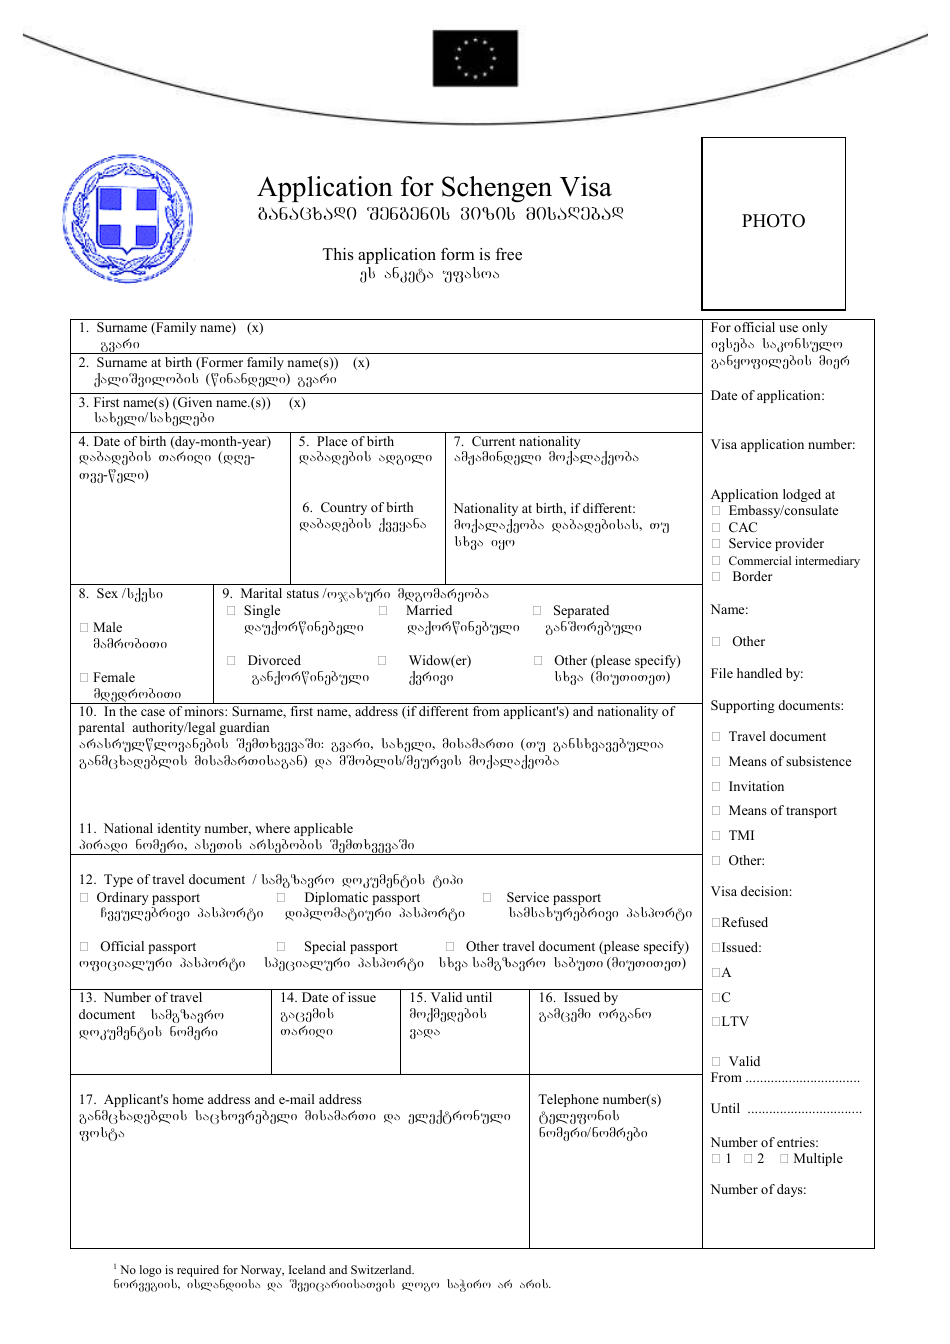 Application schengen visa Netherlands (Schengen)